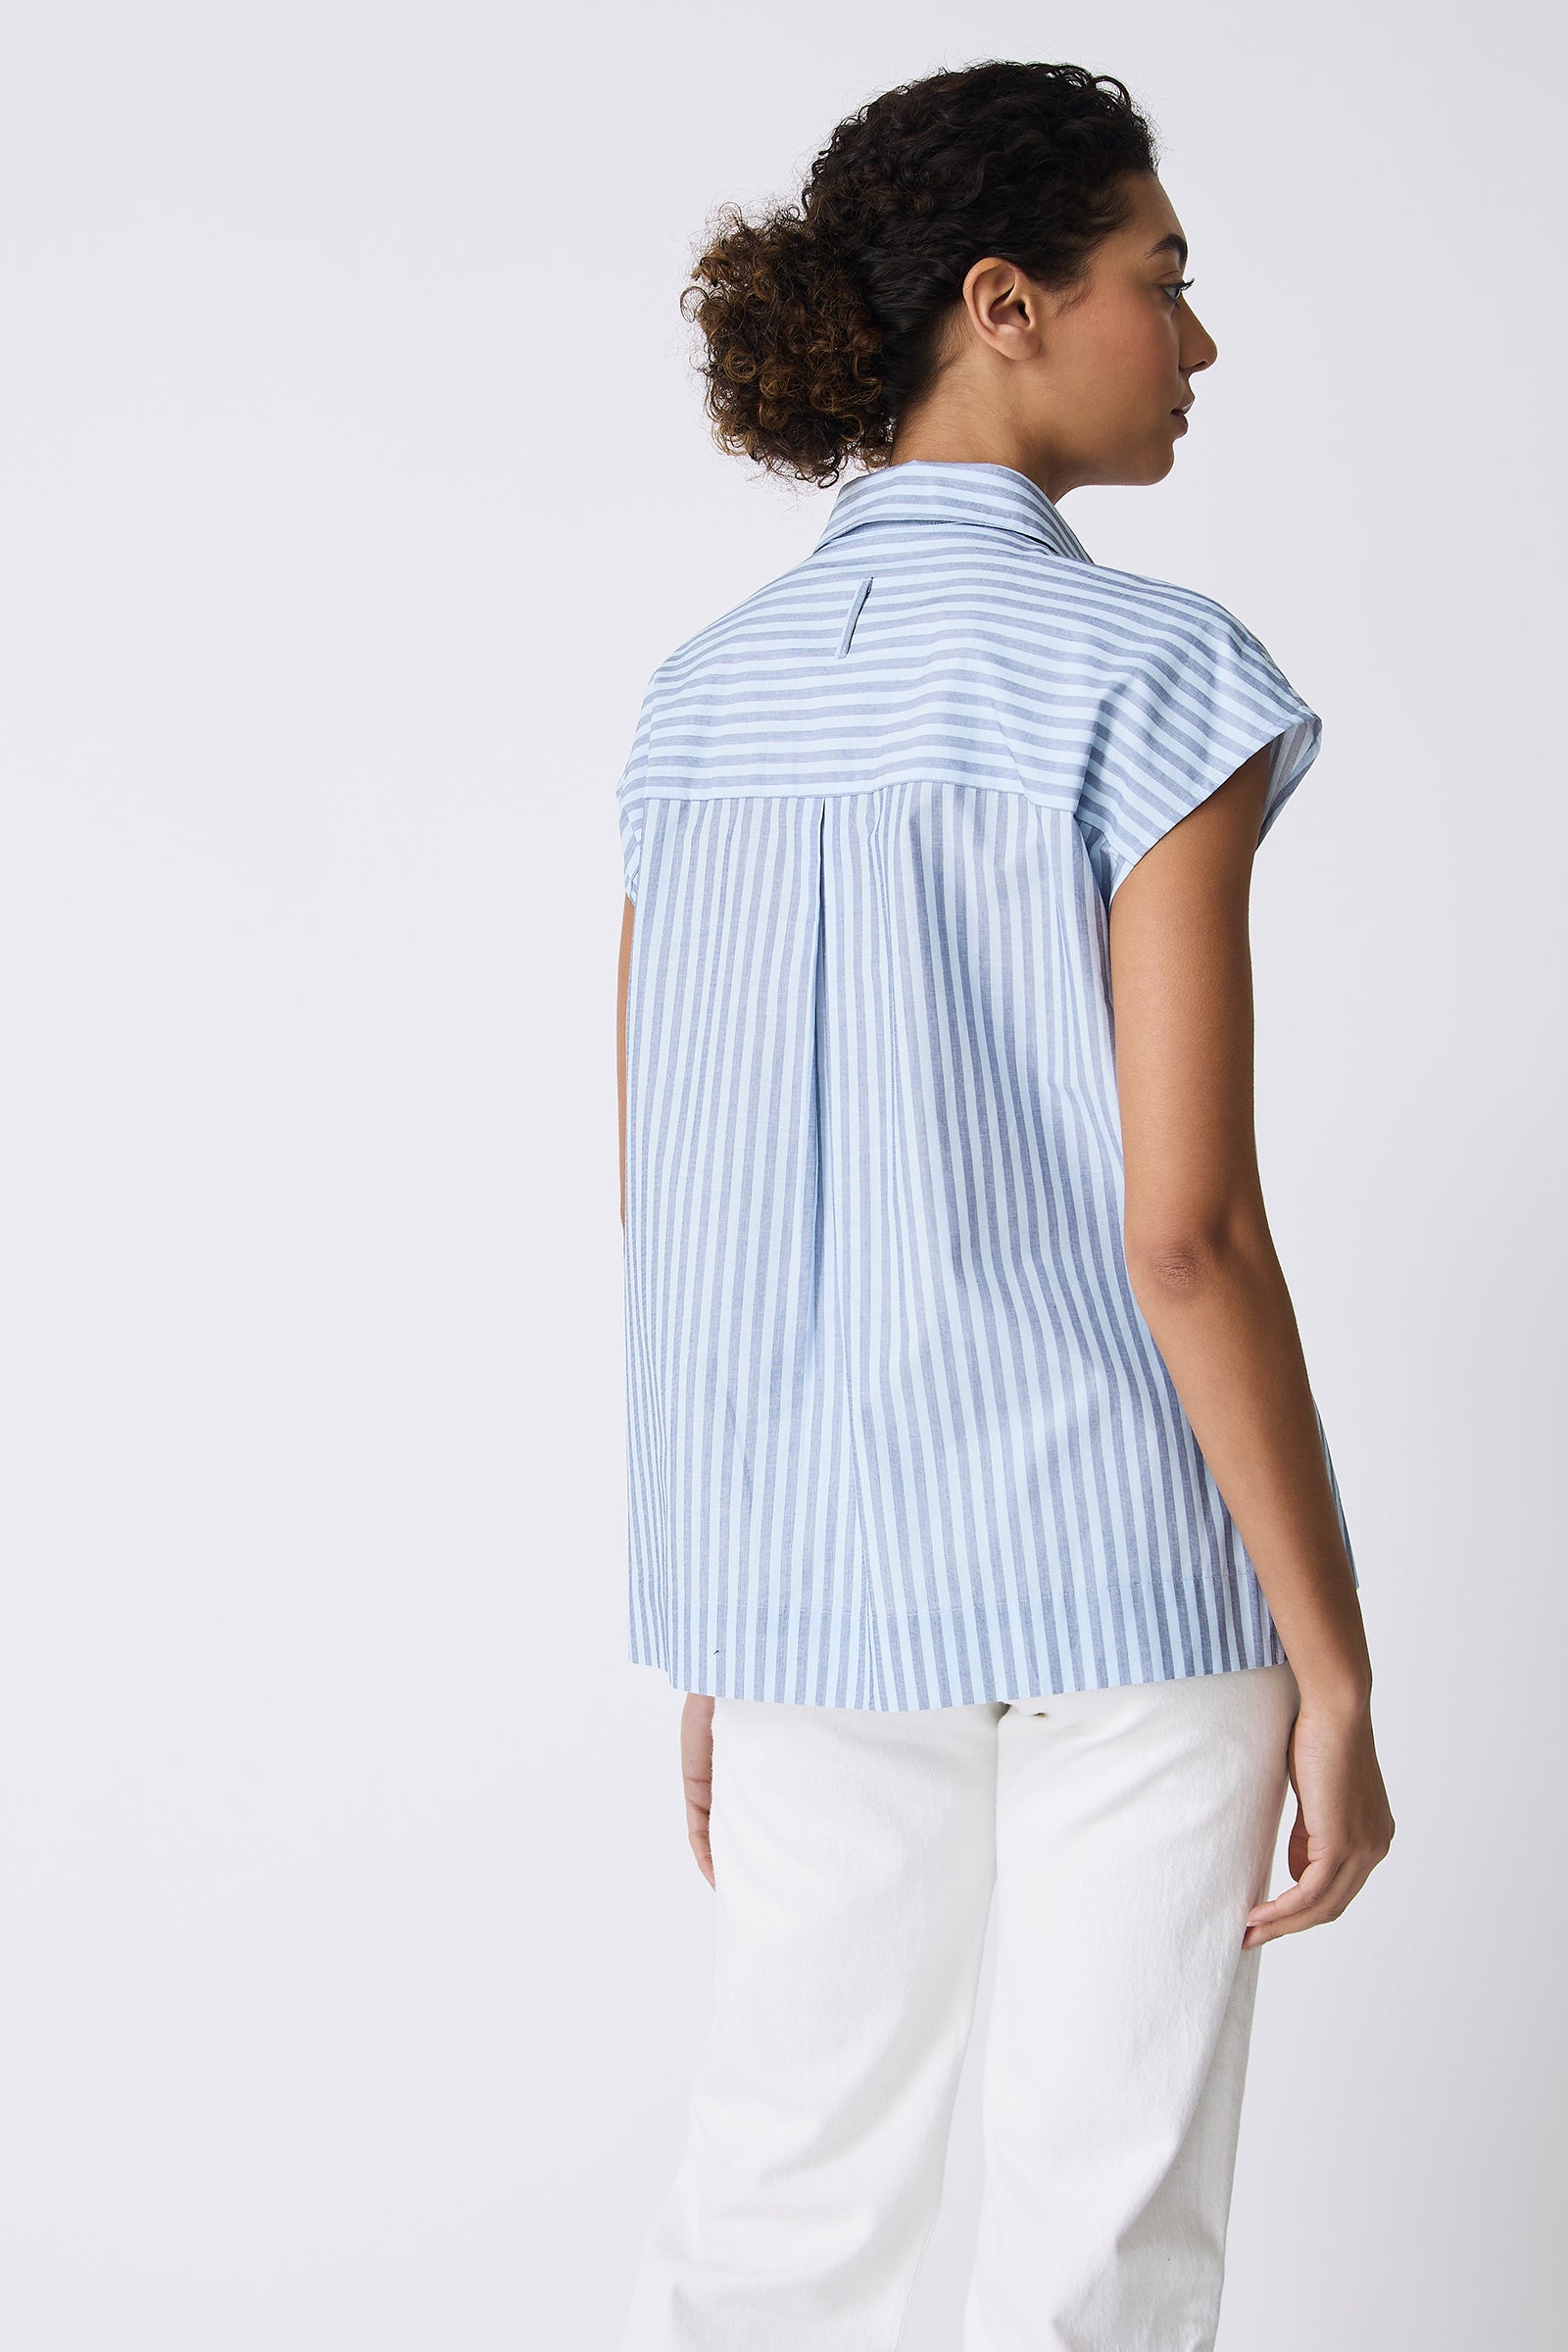 Kal Rieman Jane Cap Sleeve Shirt in Cabana Stripe Blue on model full front view